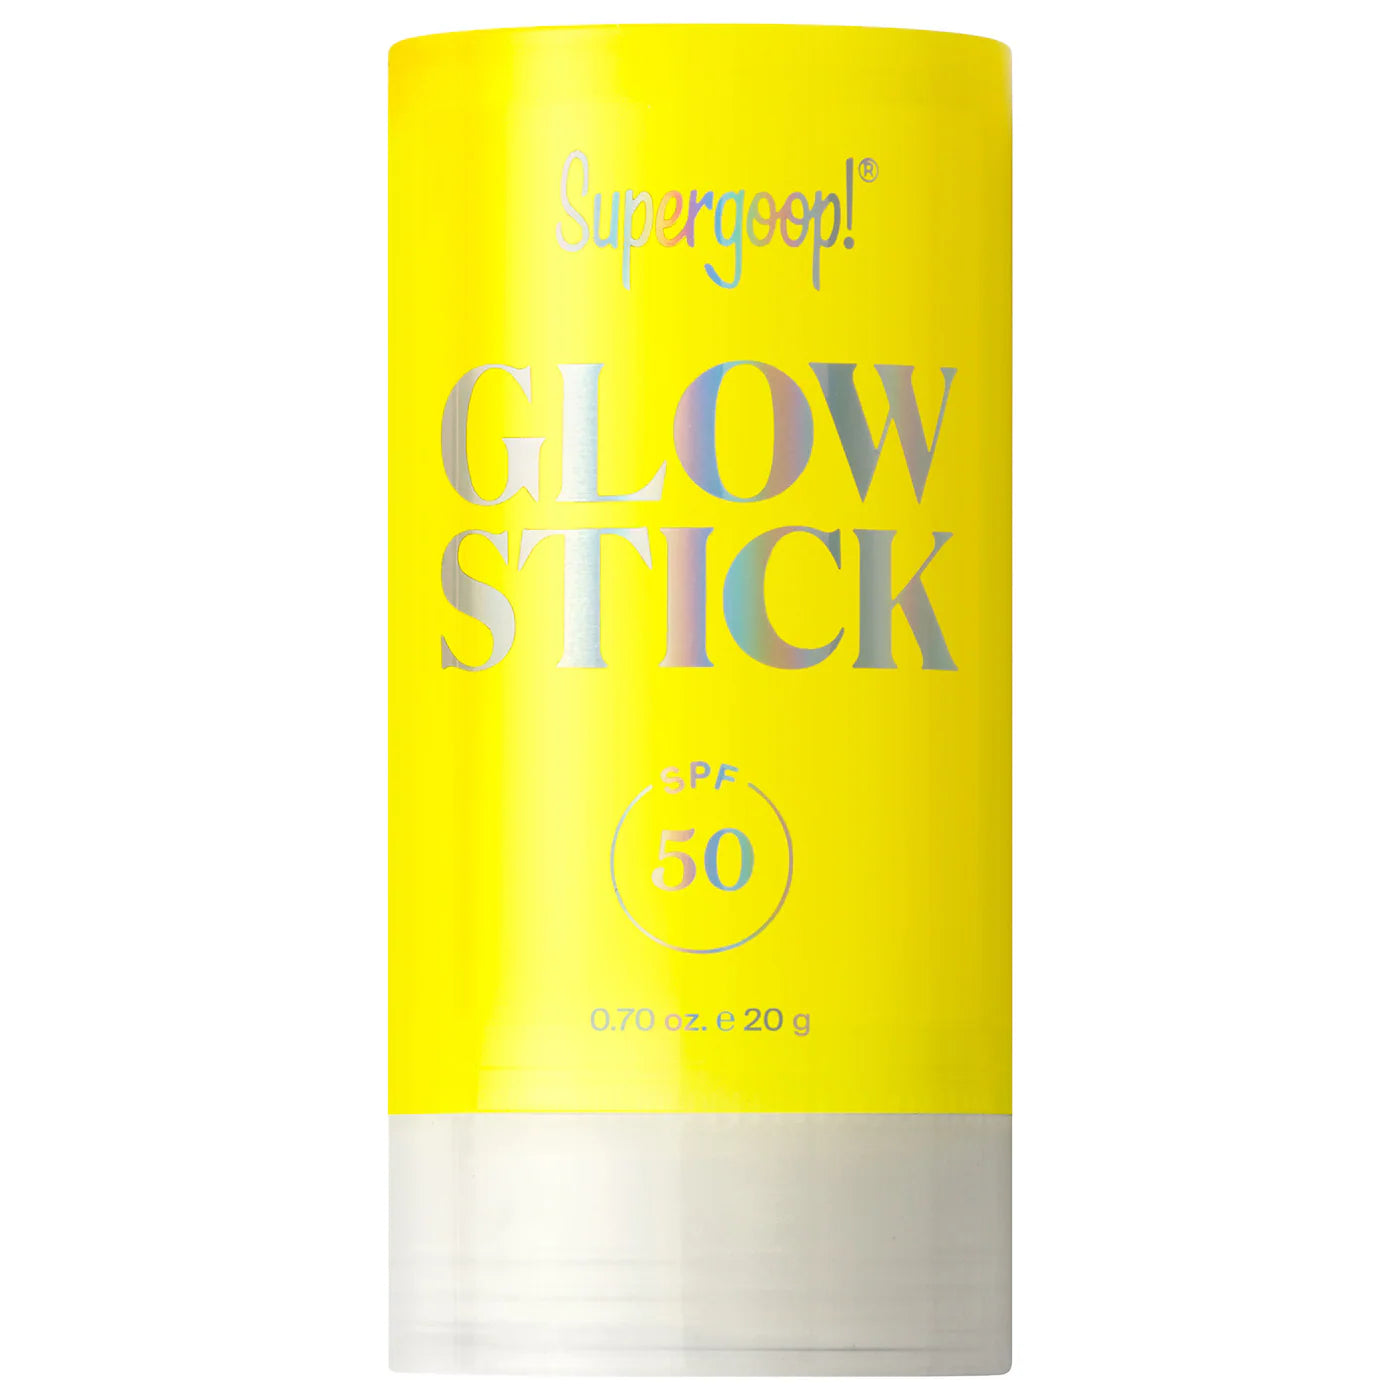 Glow Stick Sunscreen SPF 50 PA++++ | Supergoop!